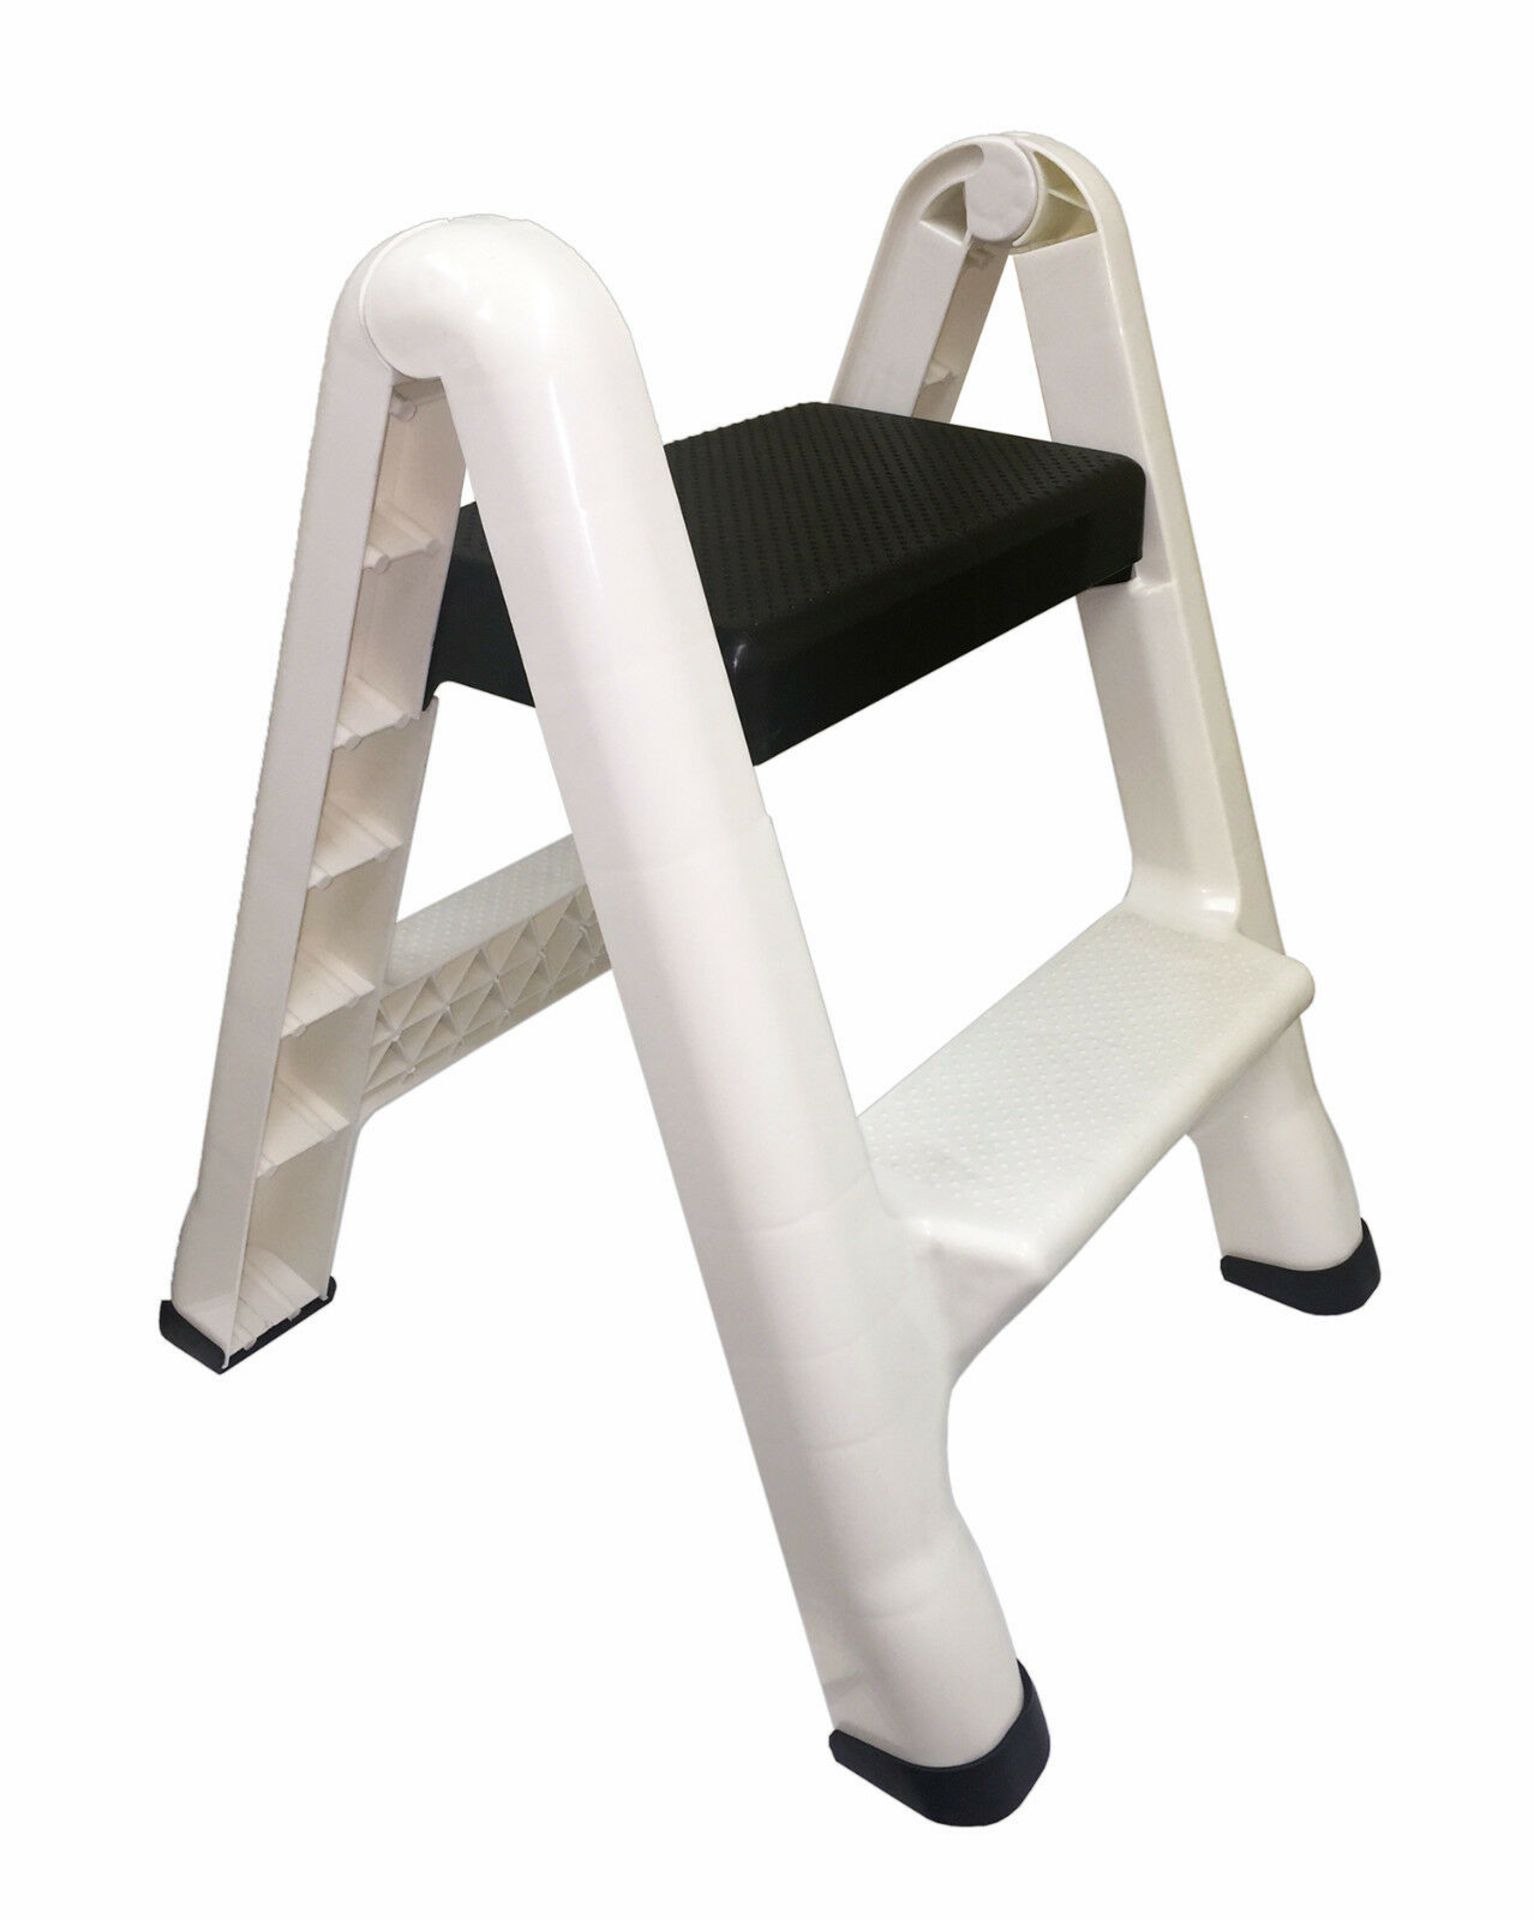 2 x 53.5cm x 44cm x 59cm (44 x 17.5 x 64.5cm closed) plastic folding step ladder (zzacsl)